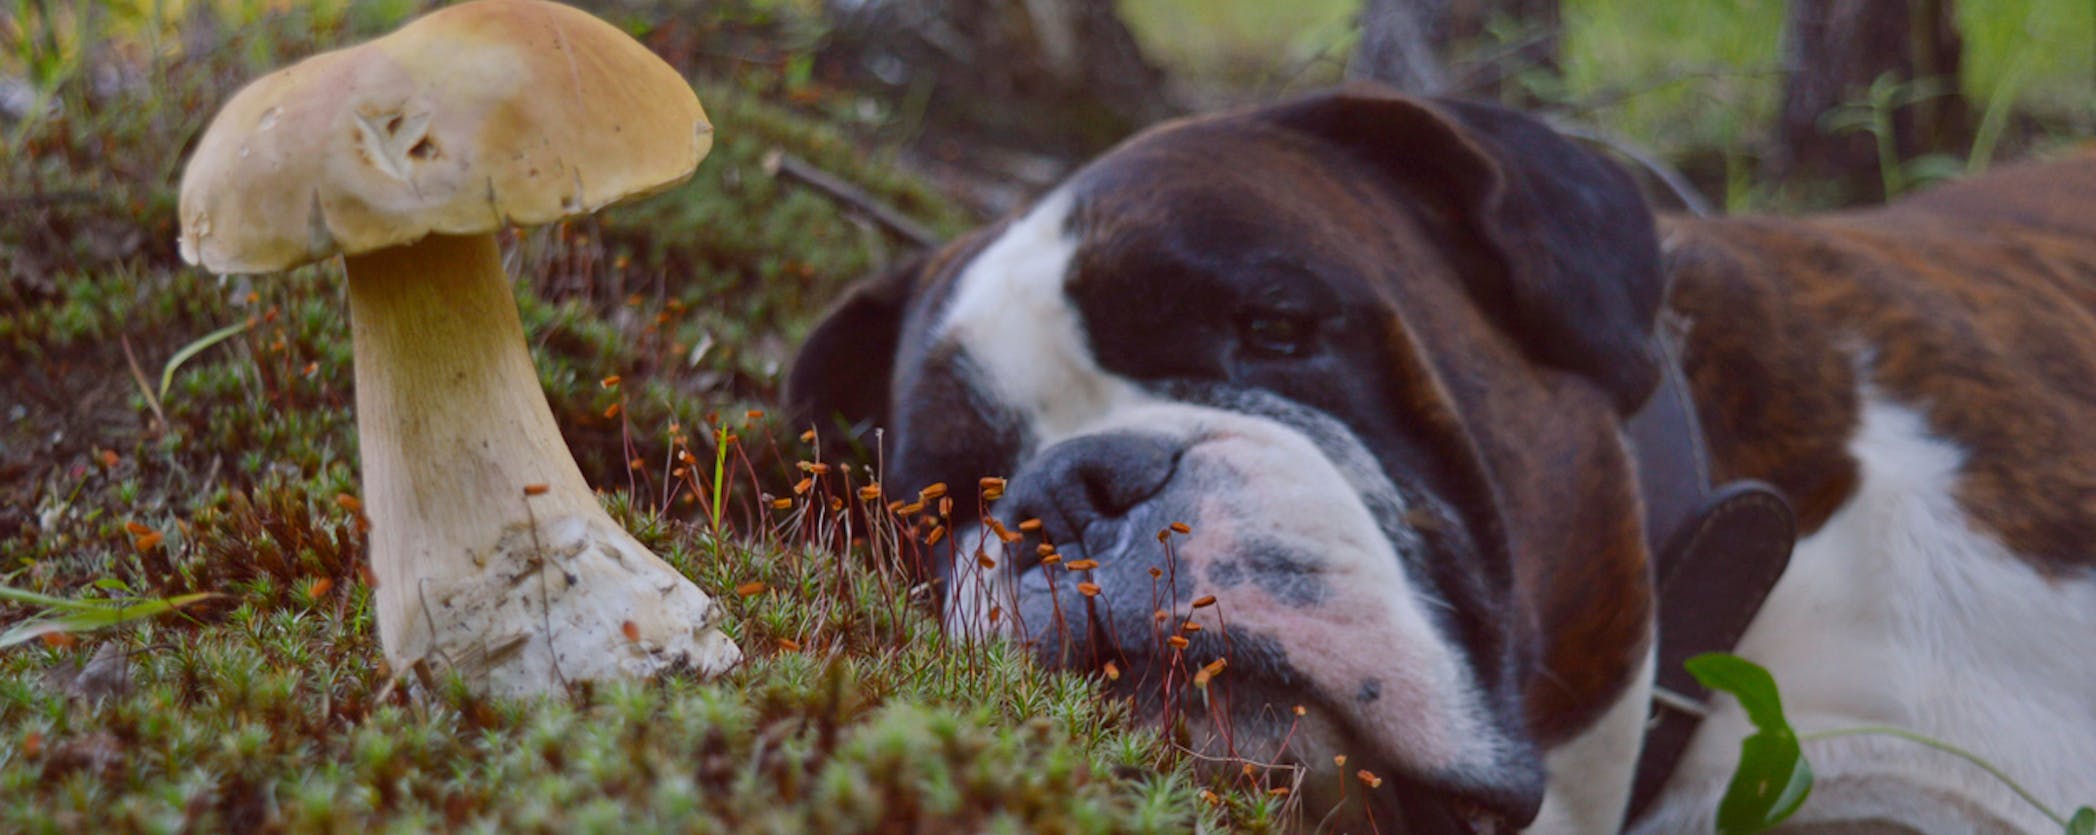 A dog staring at a wild mushroom